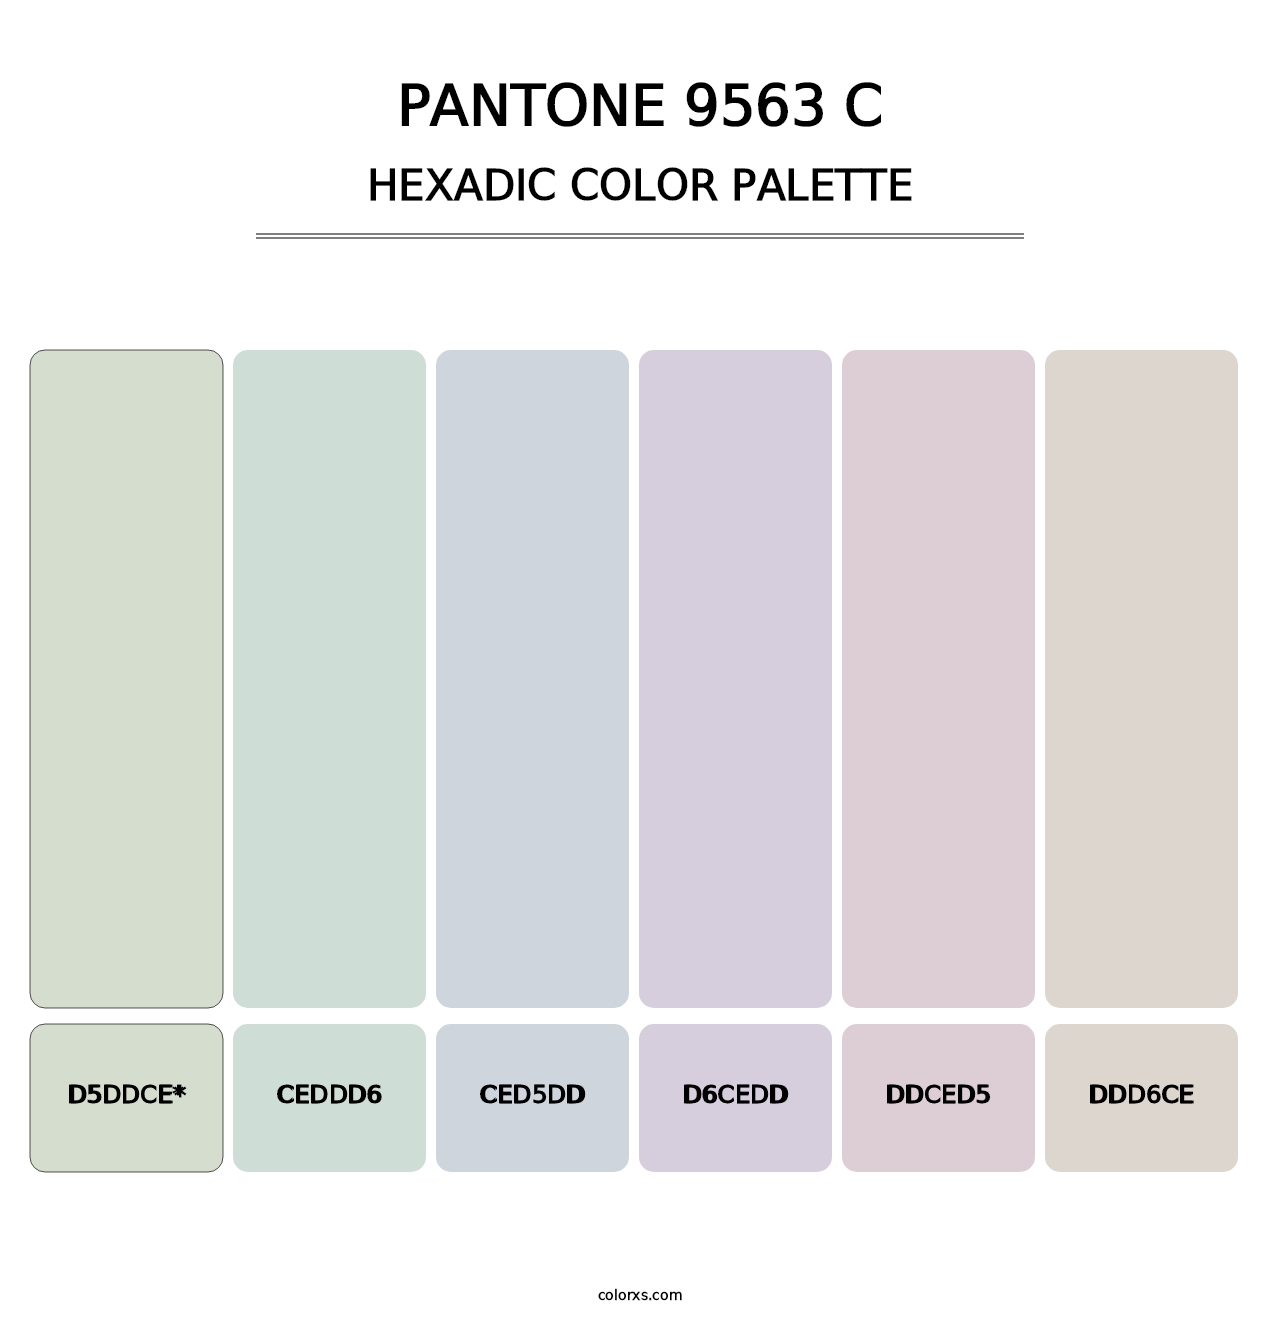 PANTONE 9563 C - Hexadic Color Palette